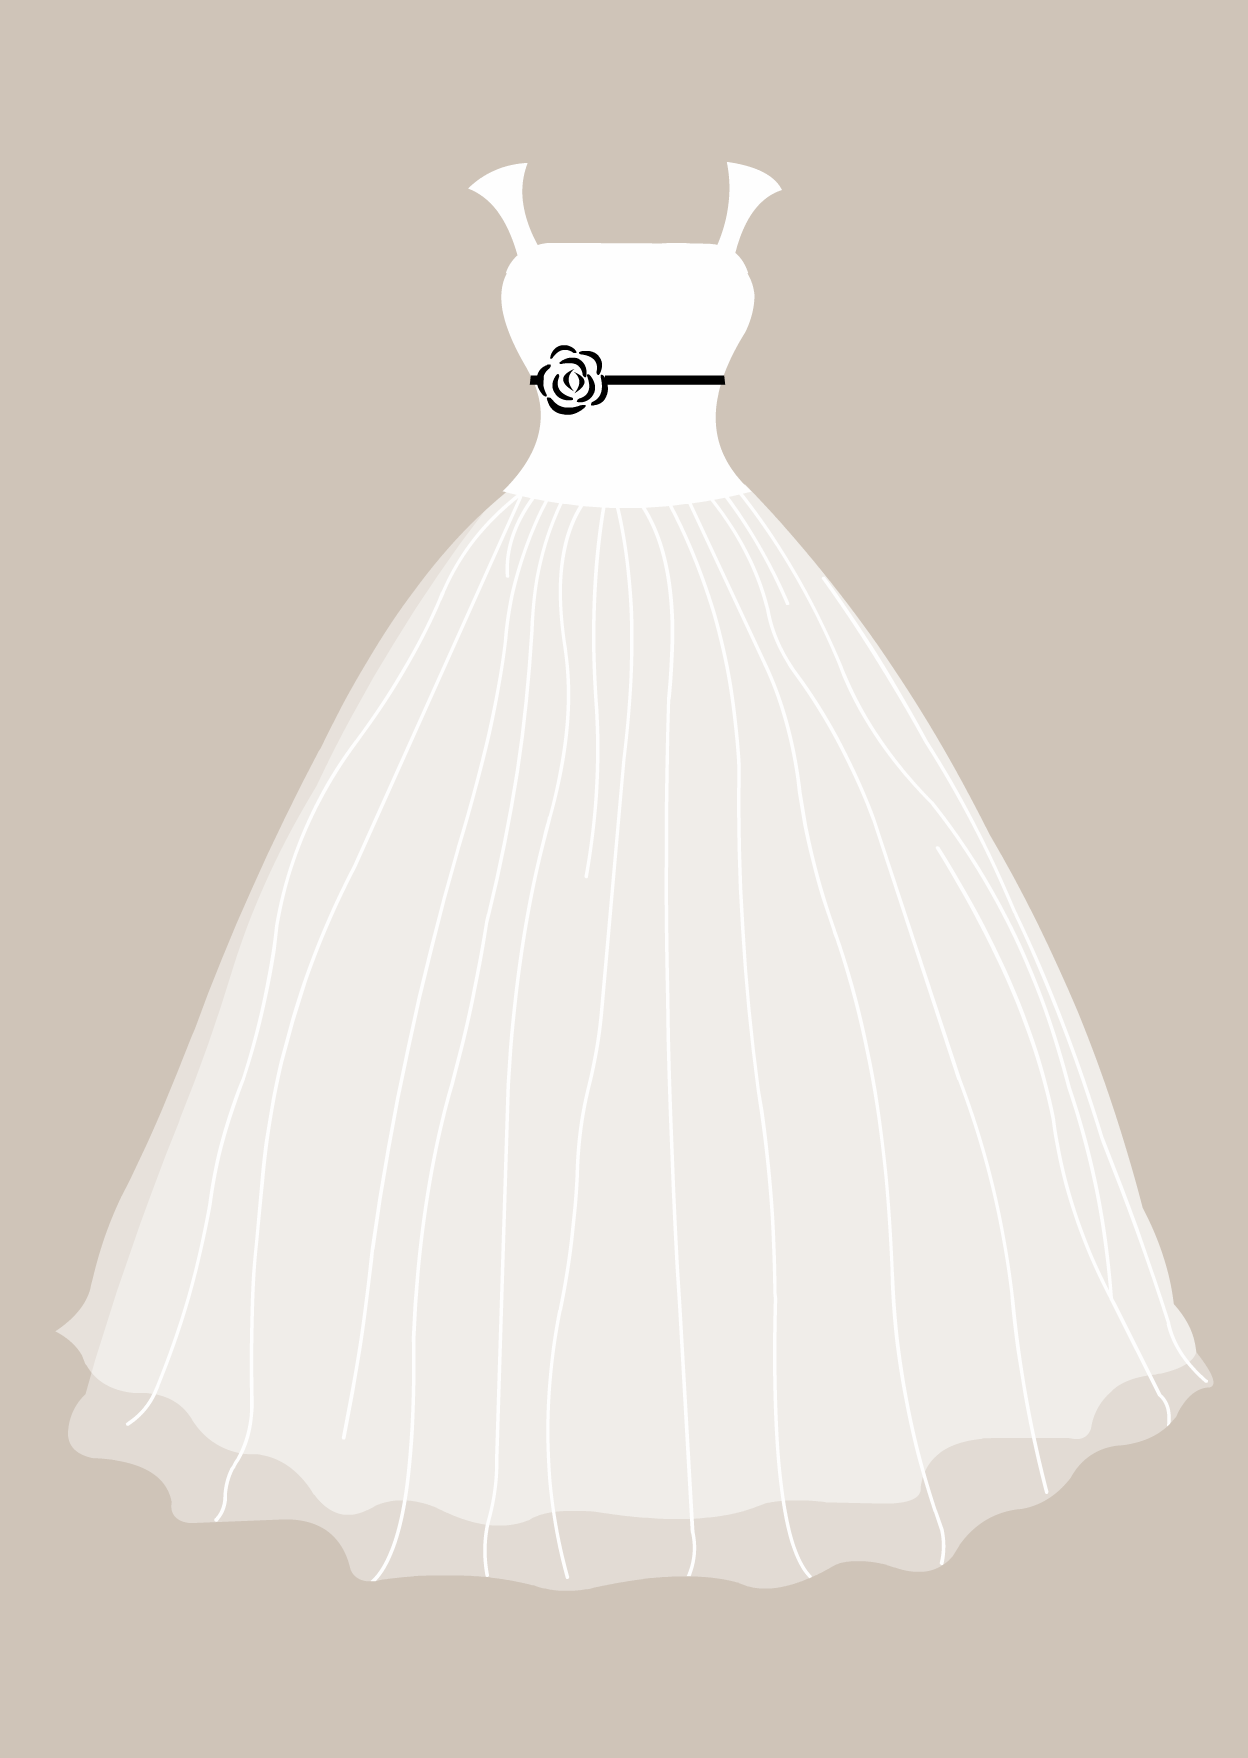 Wedding Dress PNG Transparent Images Free Download  Vector Files  Pngtree